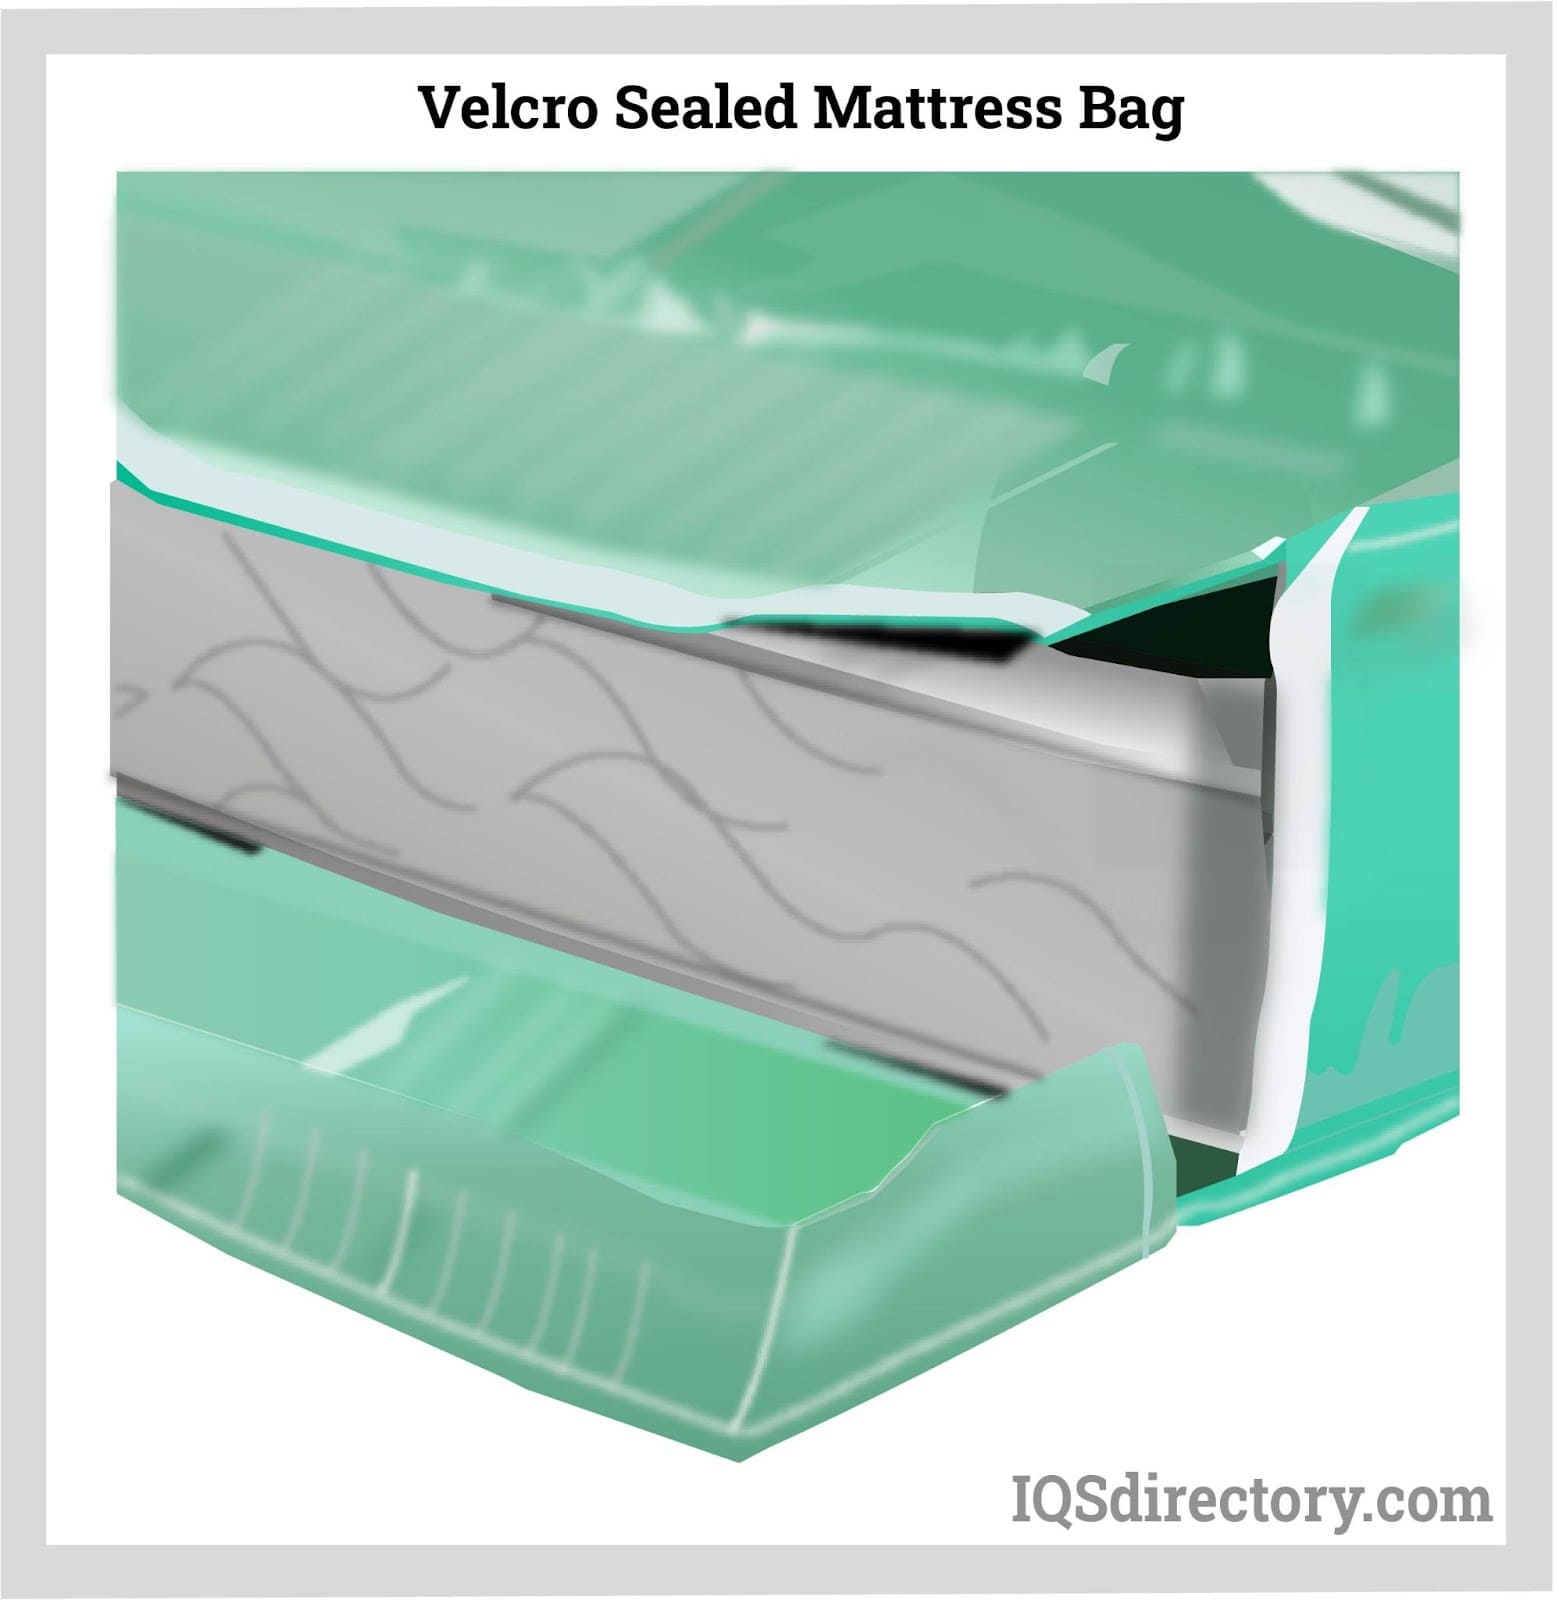 Velcro Sealed Mattress Bag